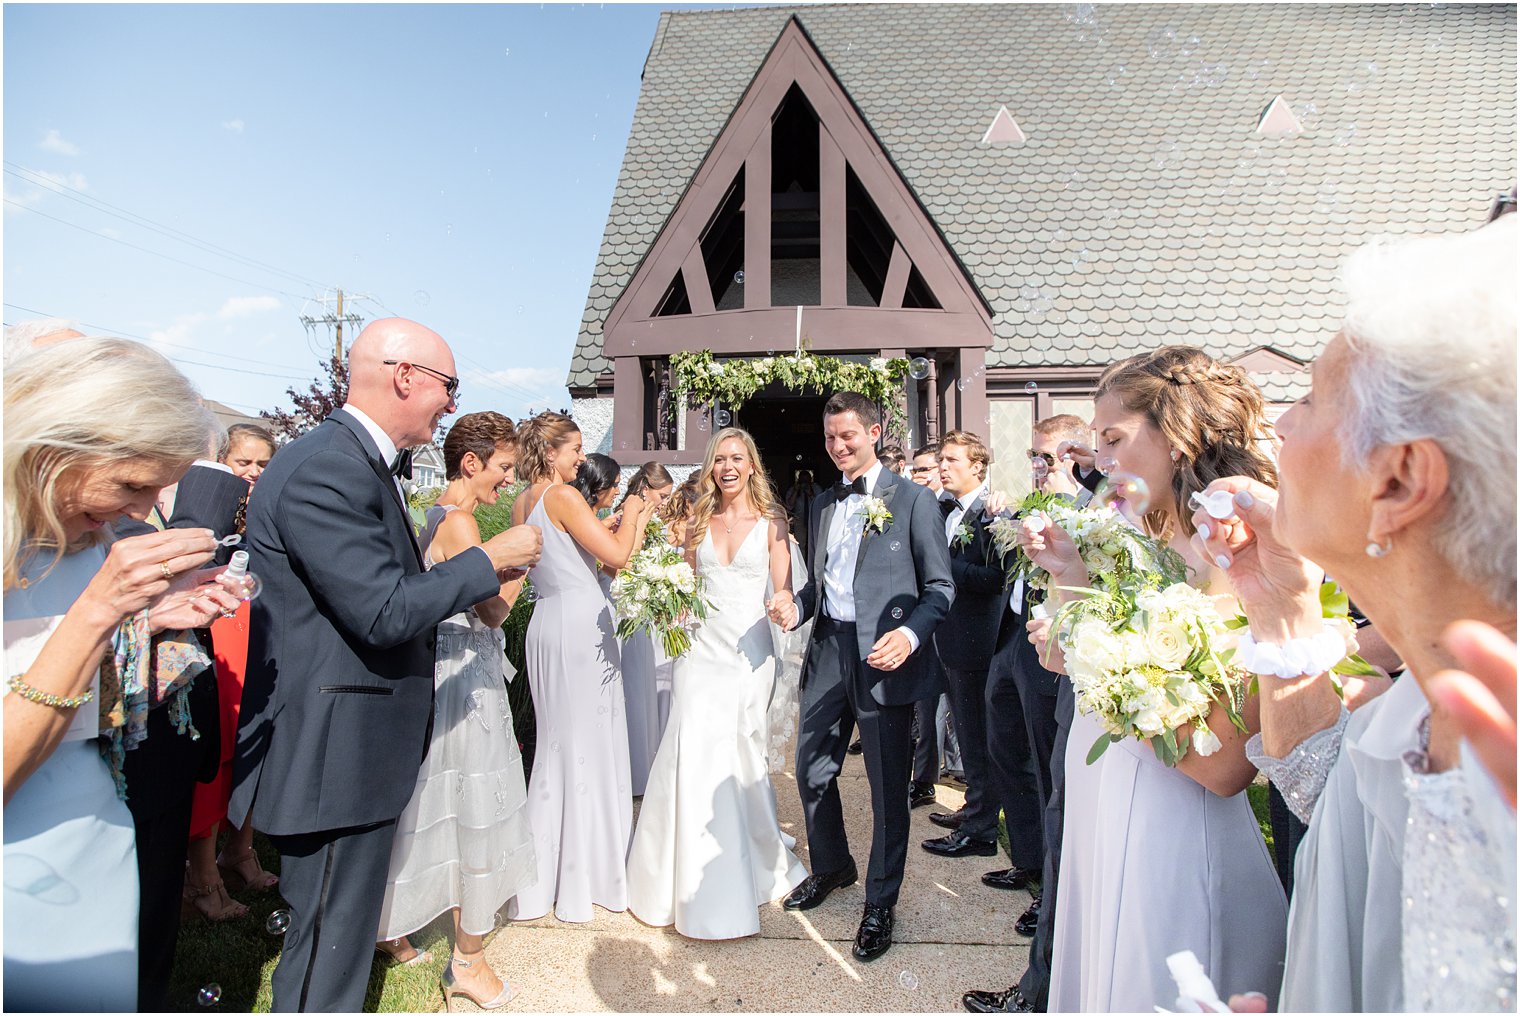 Wedding ceremony at Sacred Heart Church in Avalon NJ